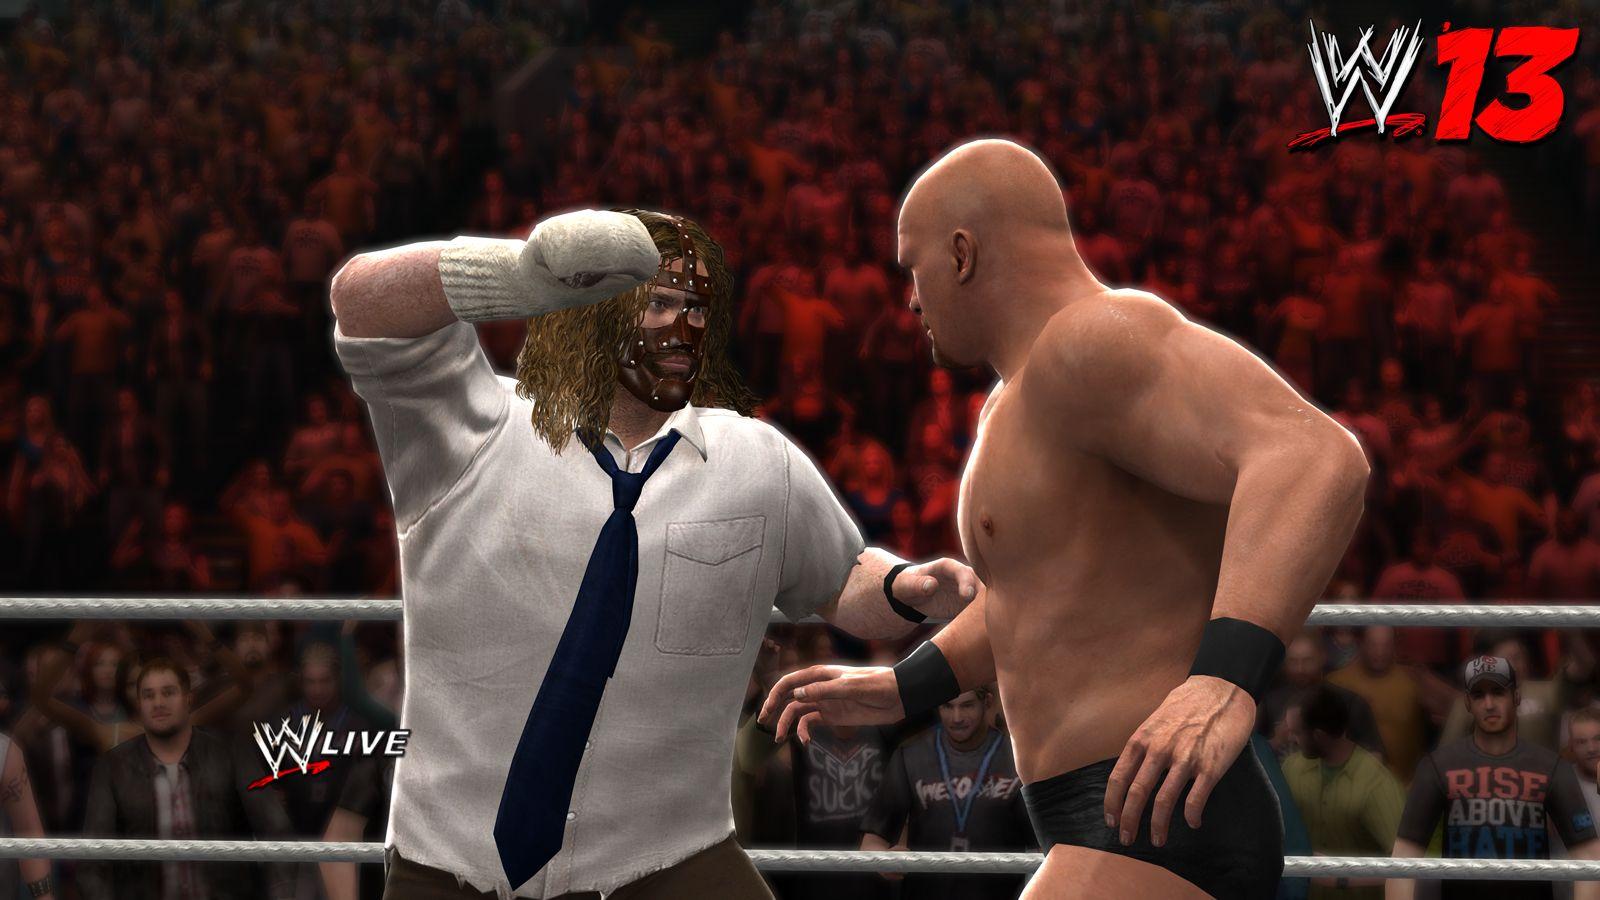 WWE 13 more new screenshots revealed